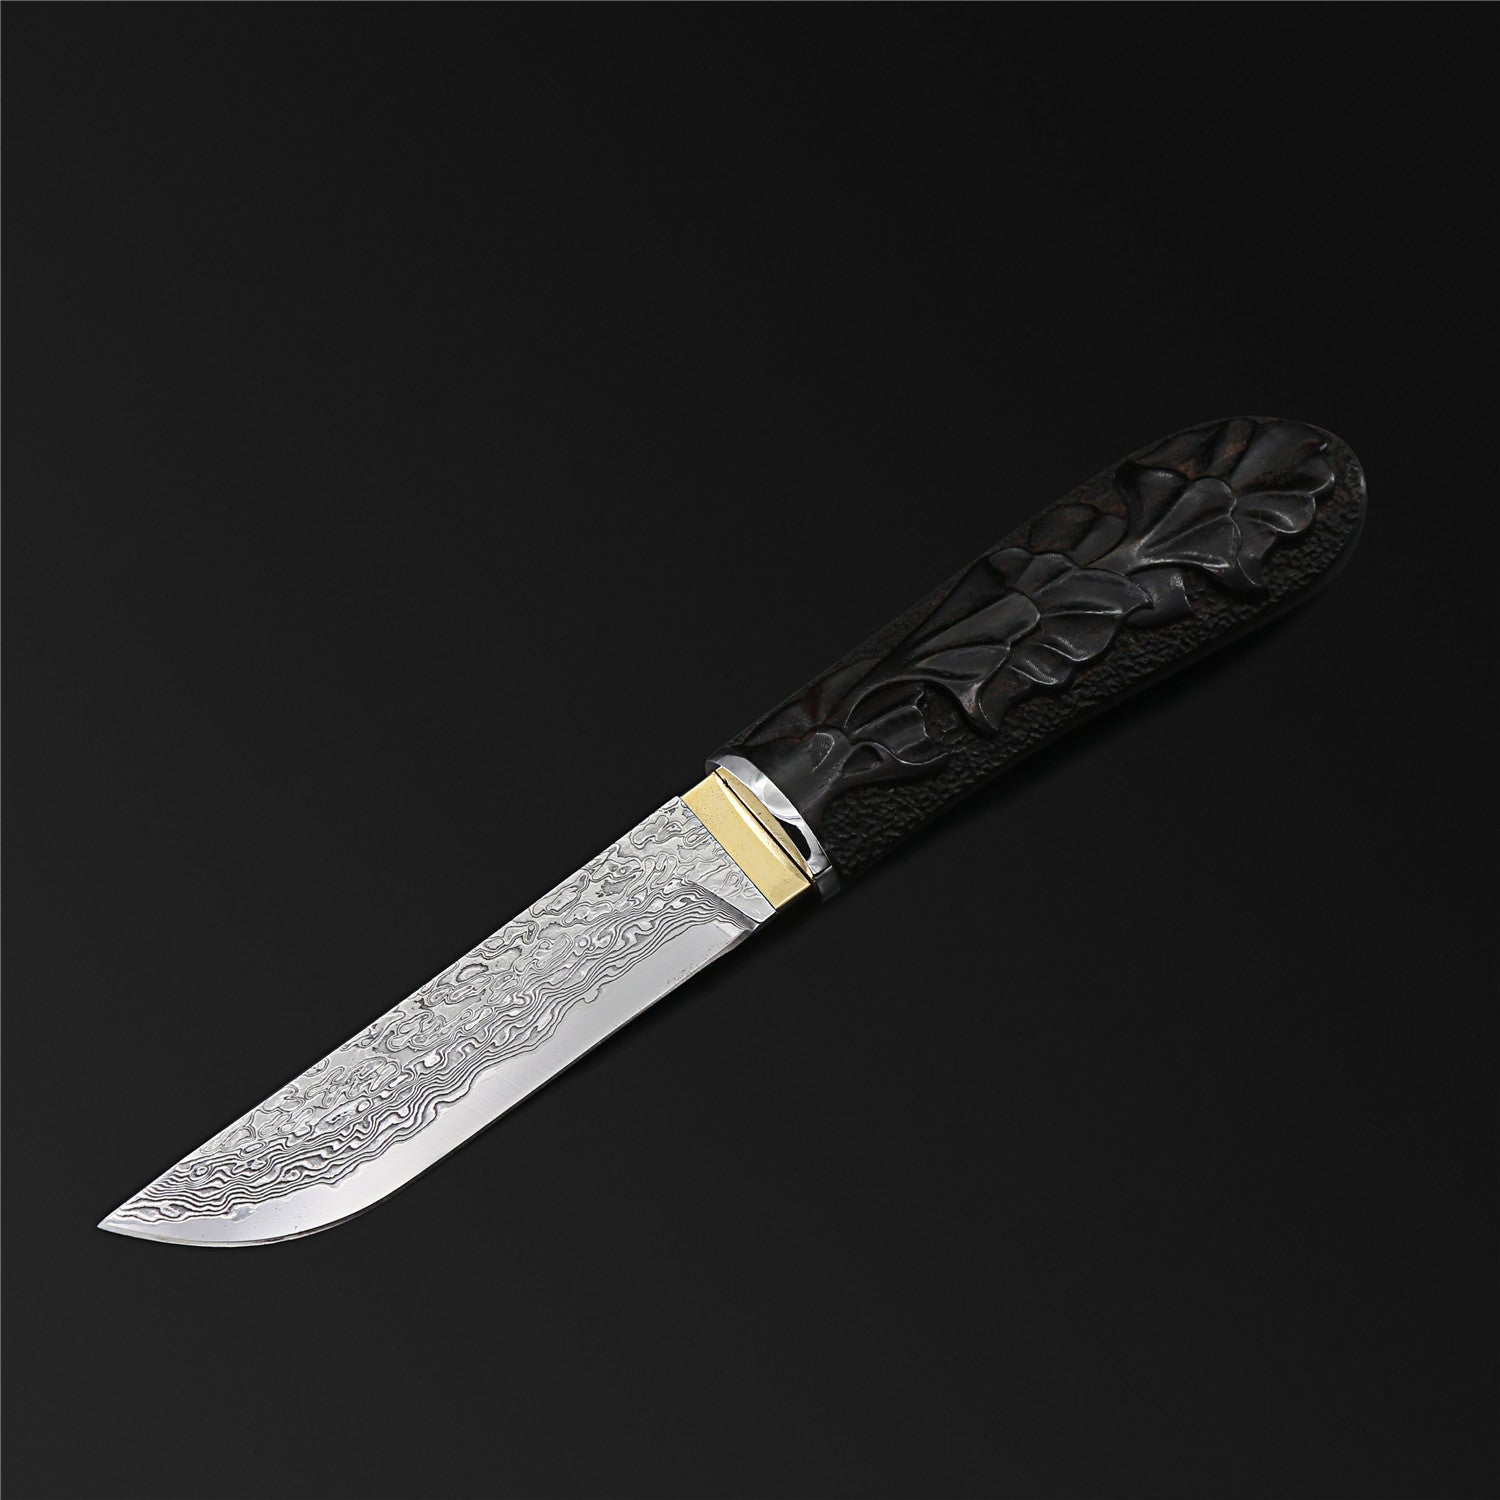 The Black Tortoise Damascus Steel Fixed Blade